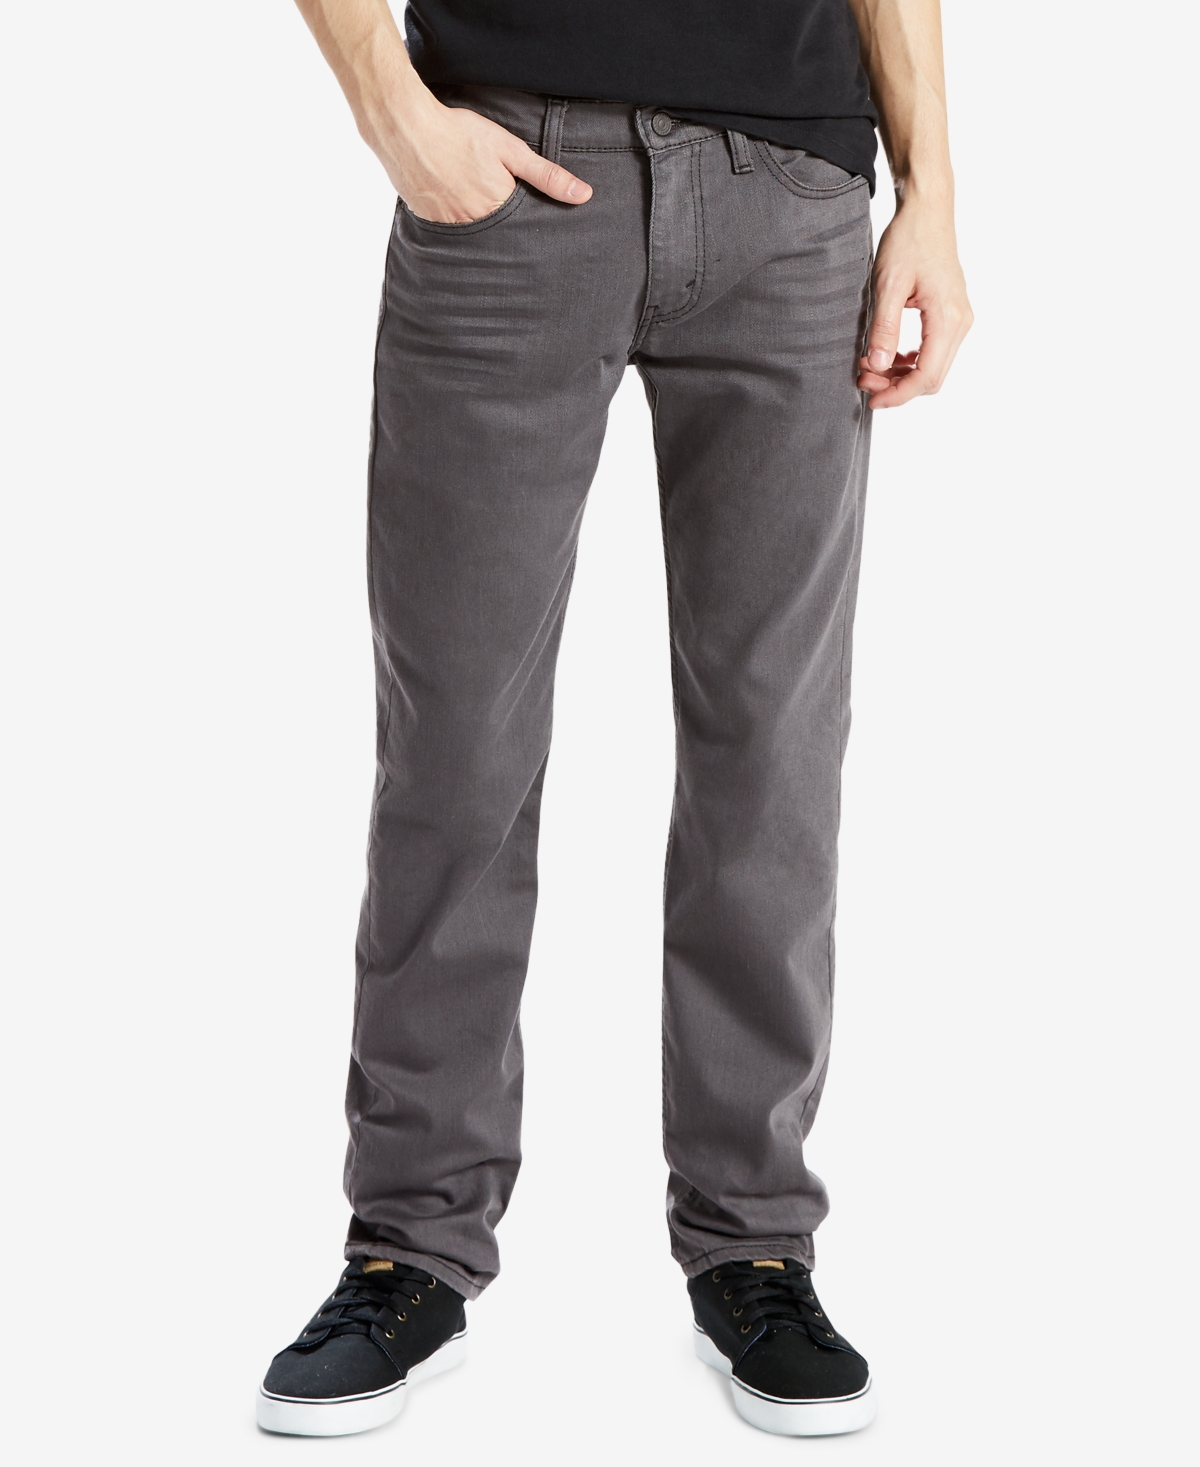 UPC 190416414307 product image for Levi's Men's 511 Slim Fit Jeans | upcitemdb.com